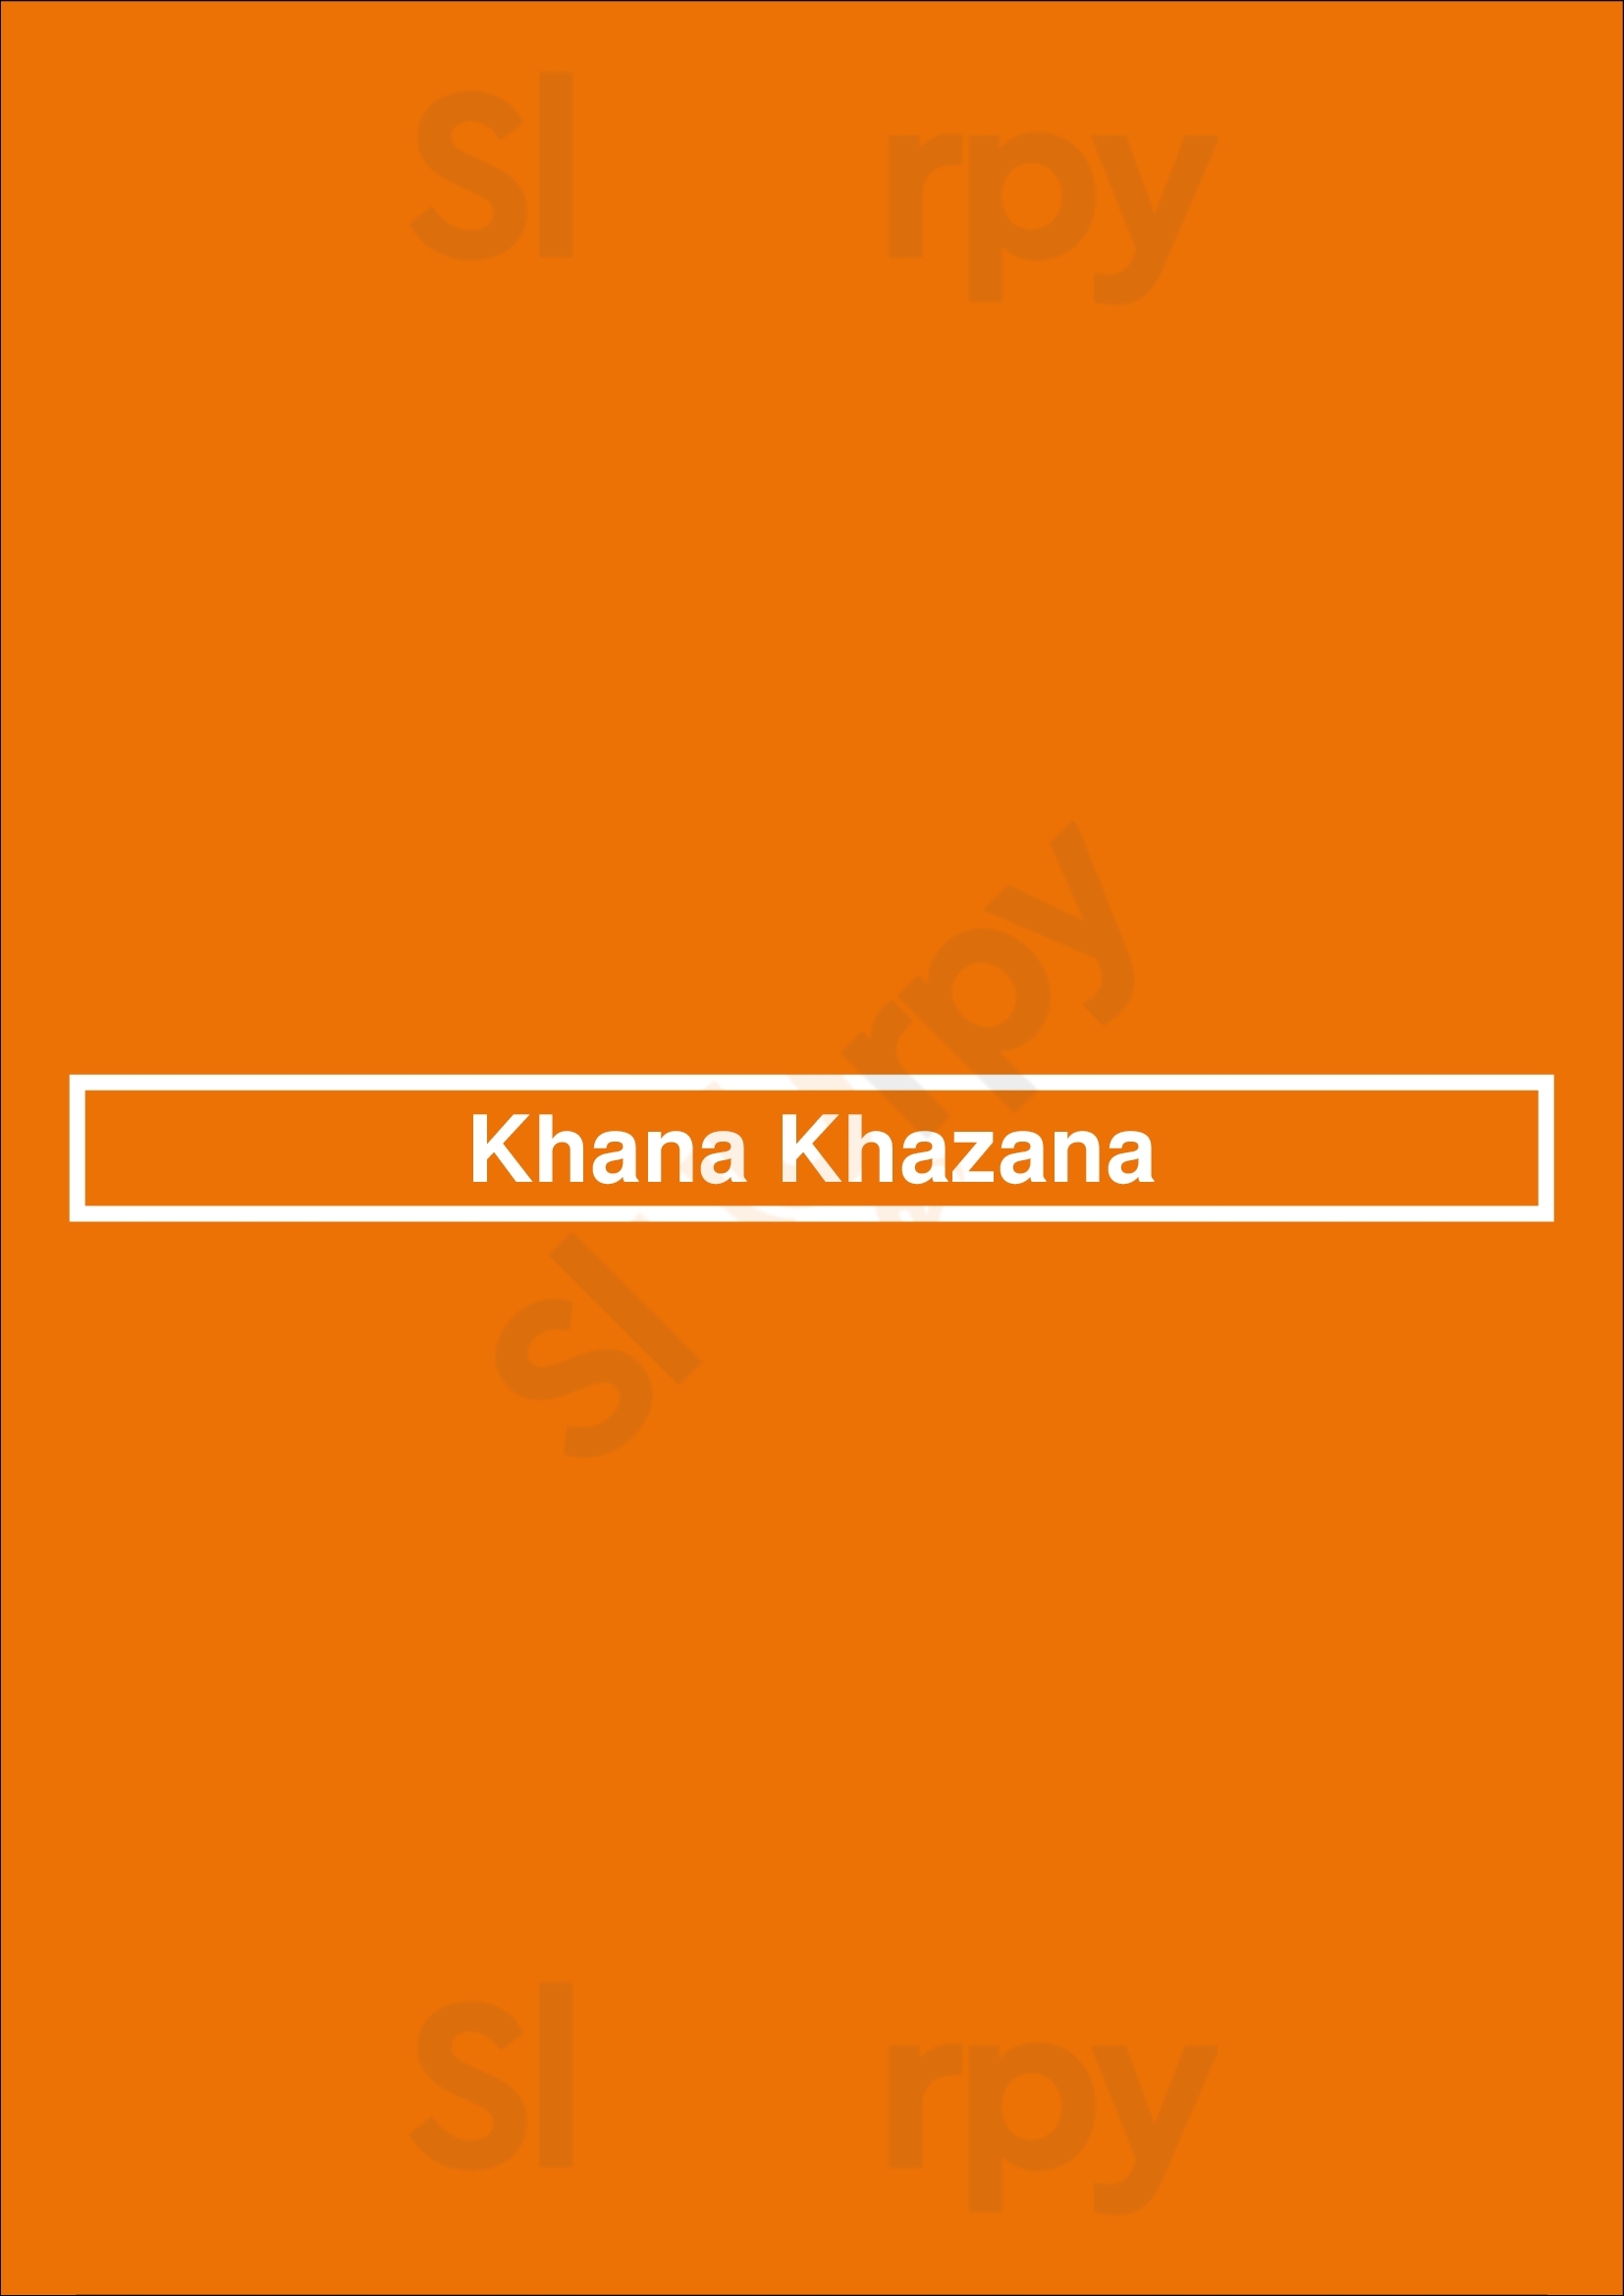 Khana Khazana Adelaide Menu - 1